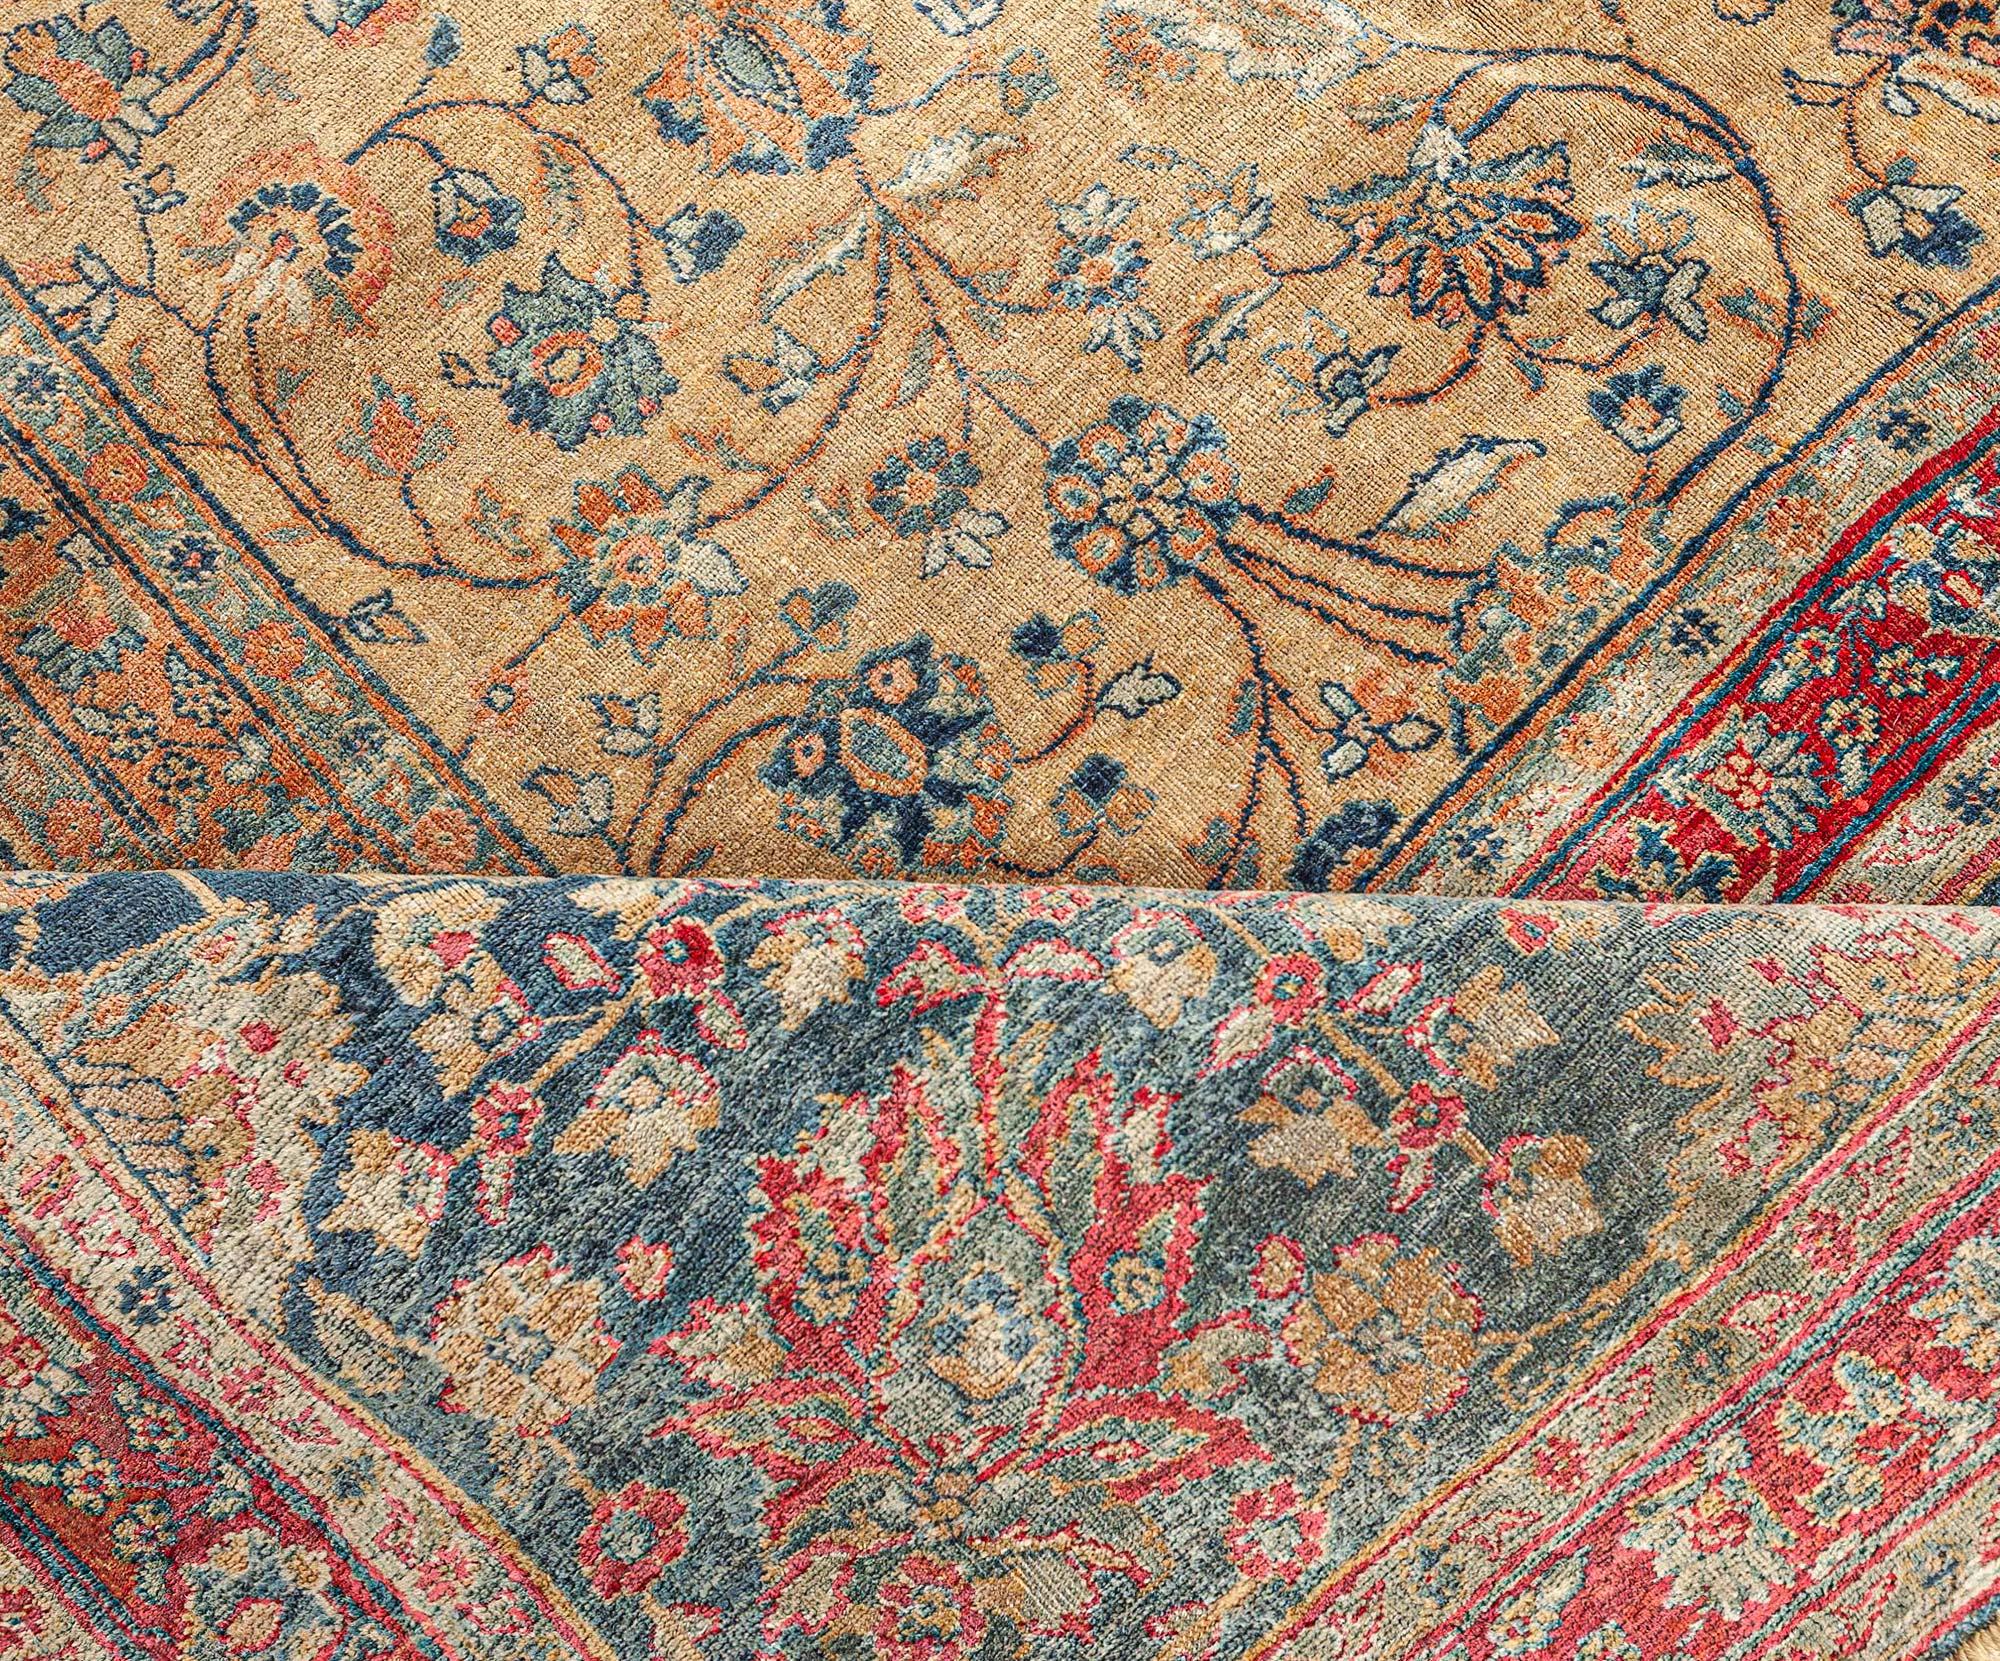 Authentic Persian Tabriz Botanic handmade wool rug
Size: 10'9